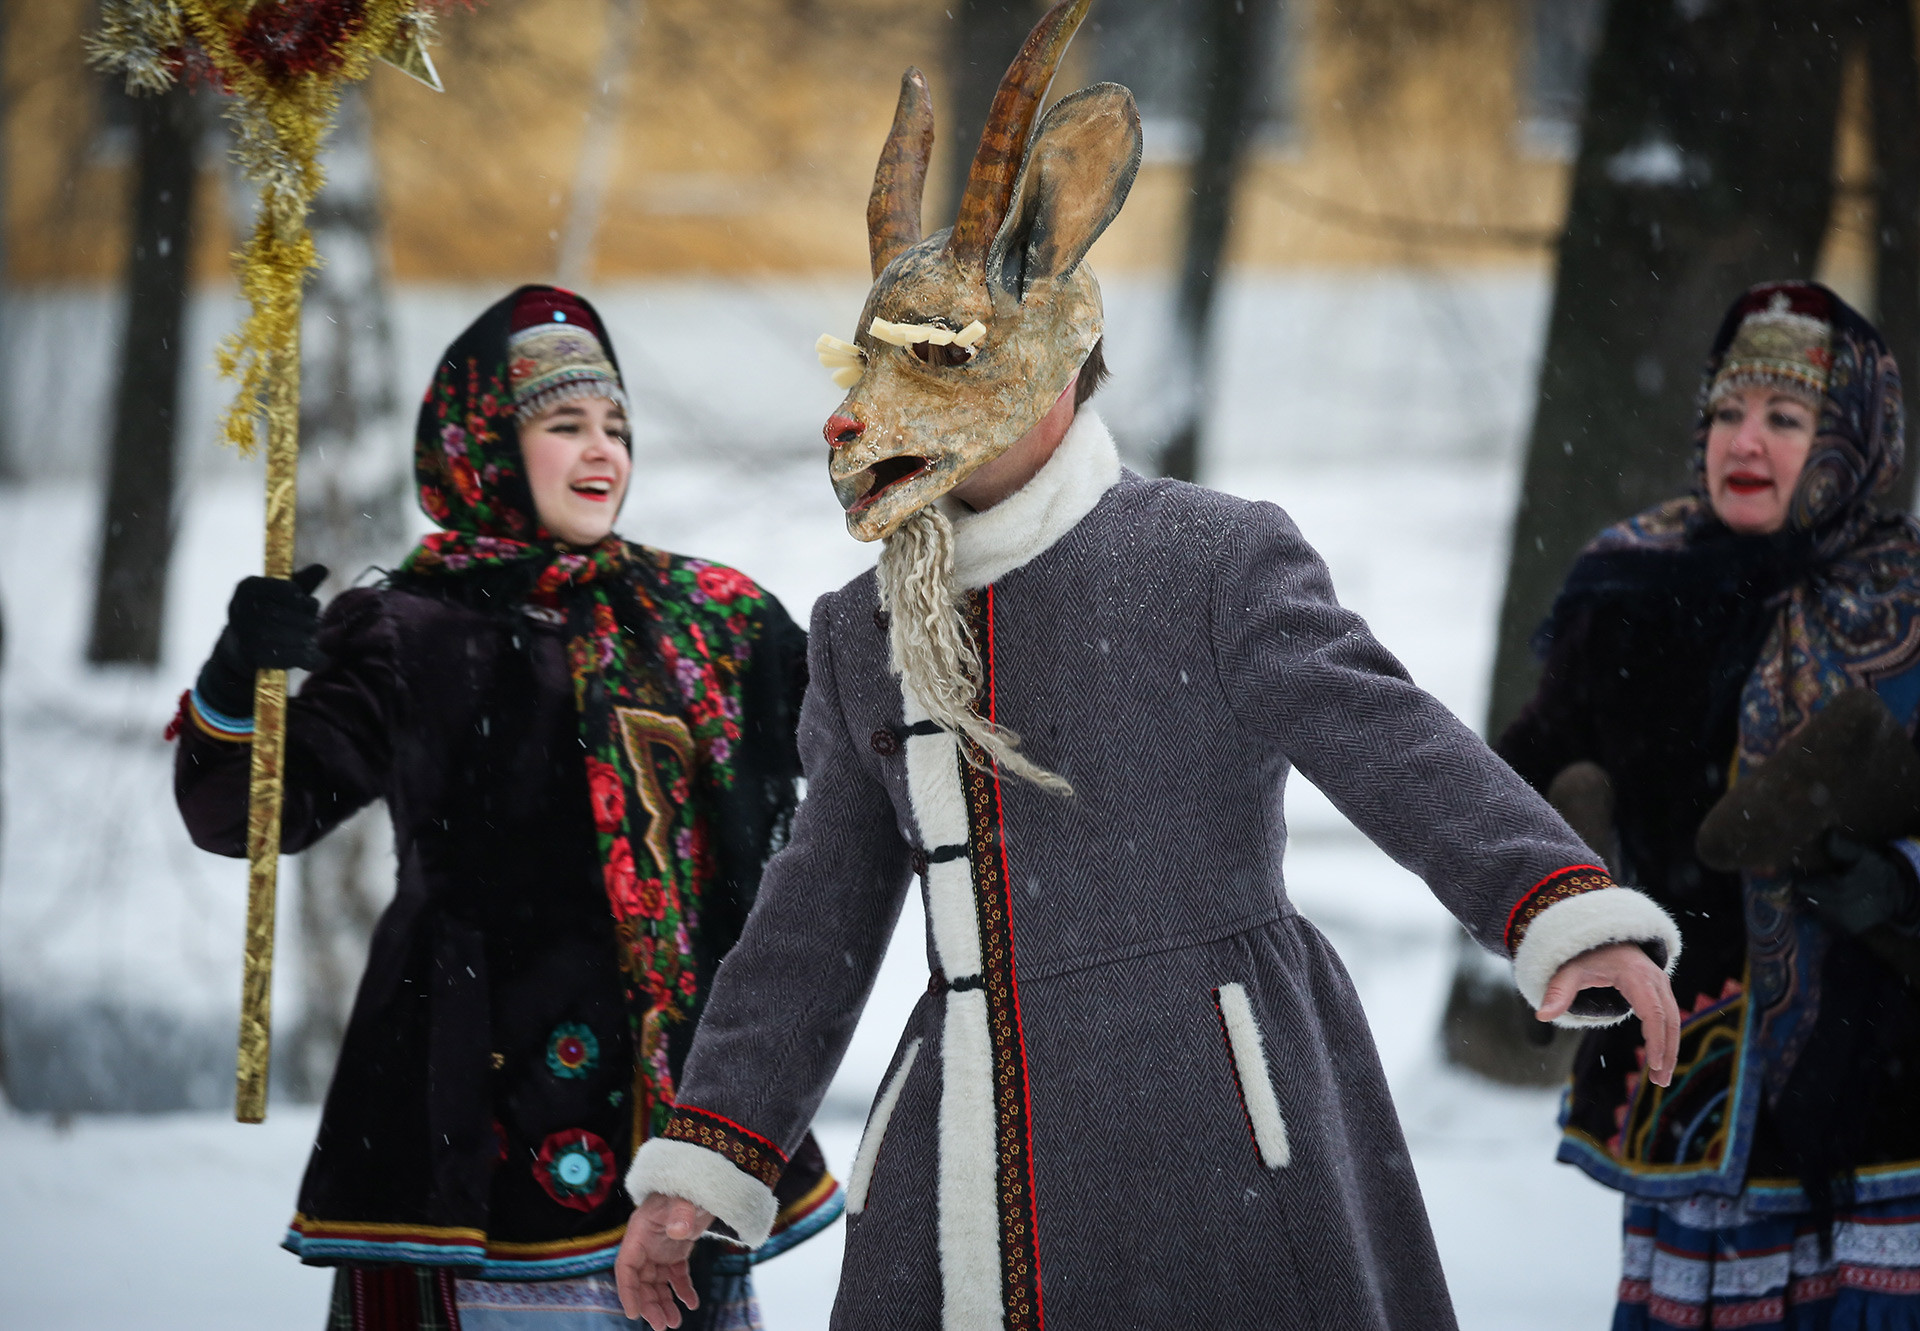 Uzorochye Theatre actors singing Christmas Carols.